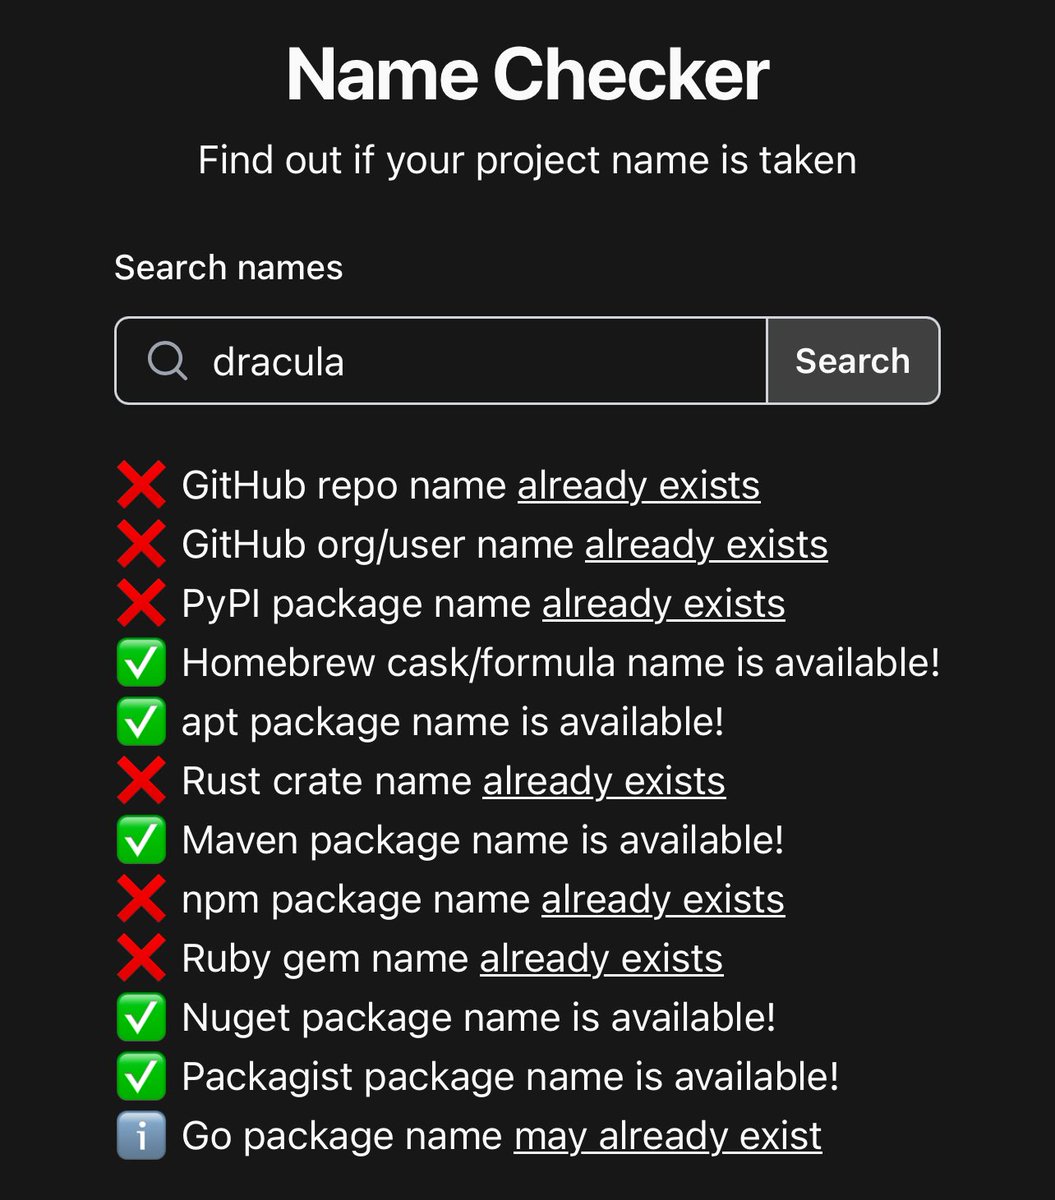 DevTools creators - here’s your new favorite tool: namechecker.vercel.app